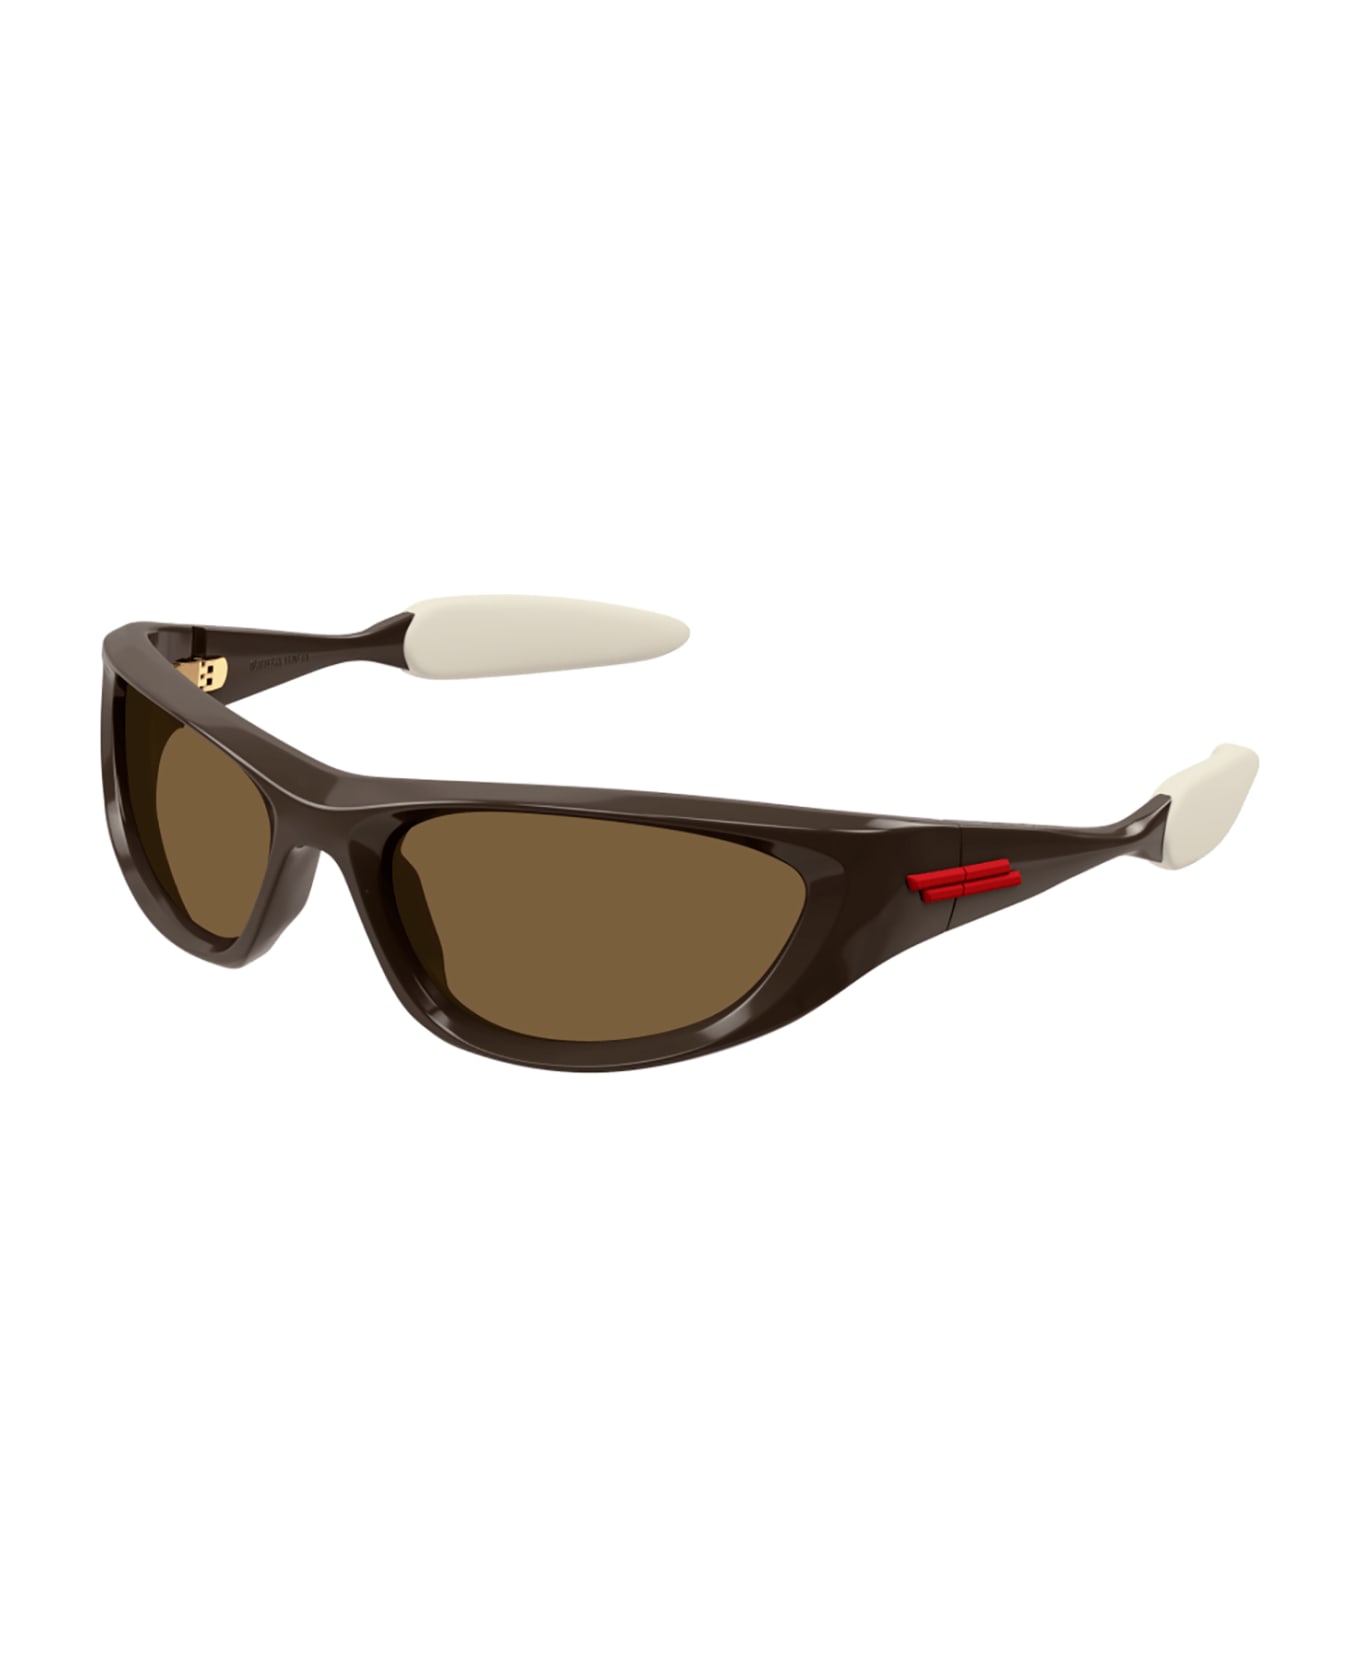 Bottega Veneta Eyewear 1e404id0a - Swarovski Stones Sunglasses